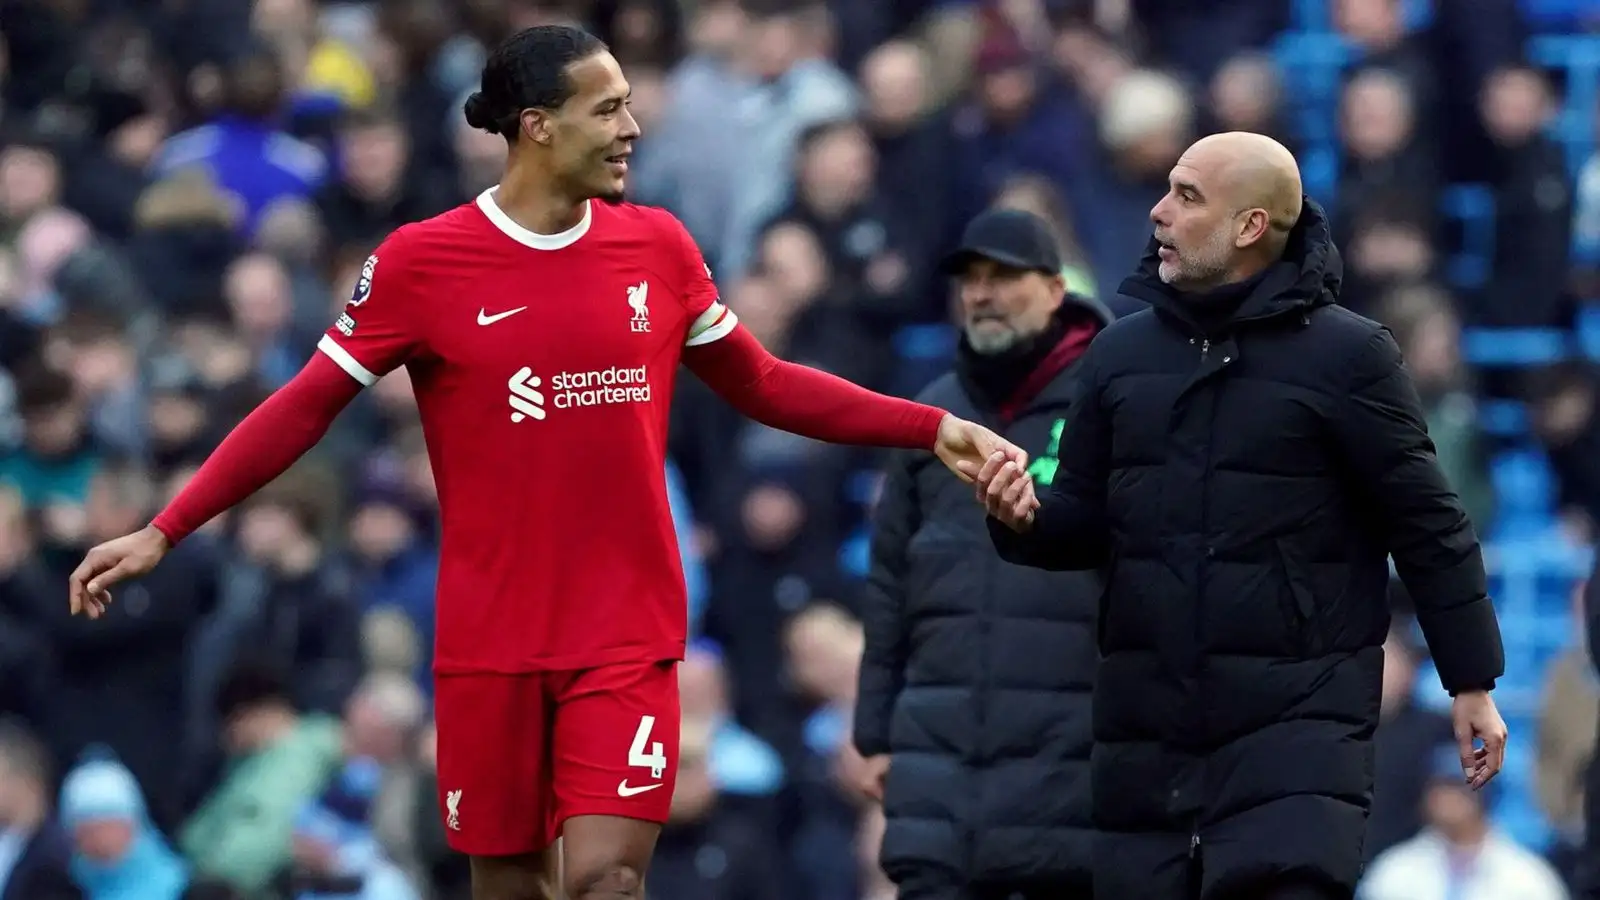 Liverpool defender Virgil van Dijk talks to Manchester City manager Pep Guardiola